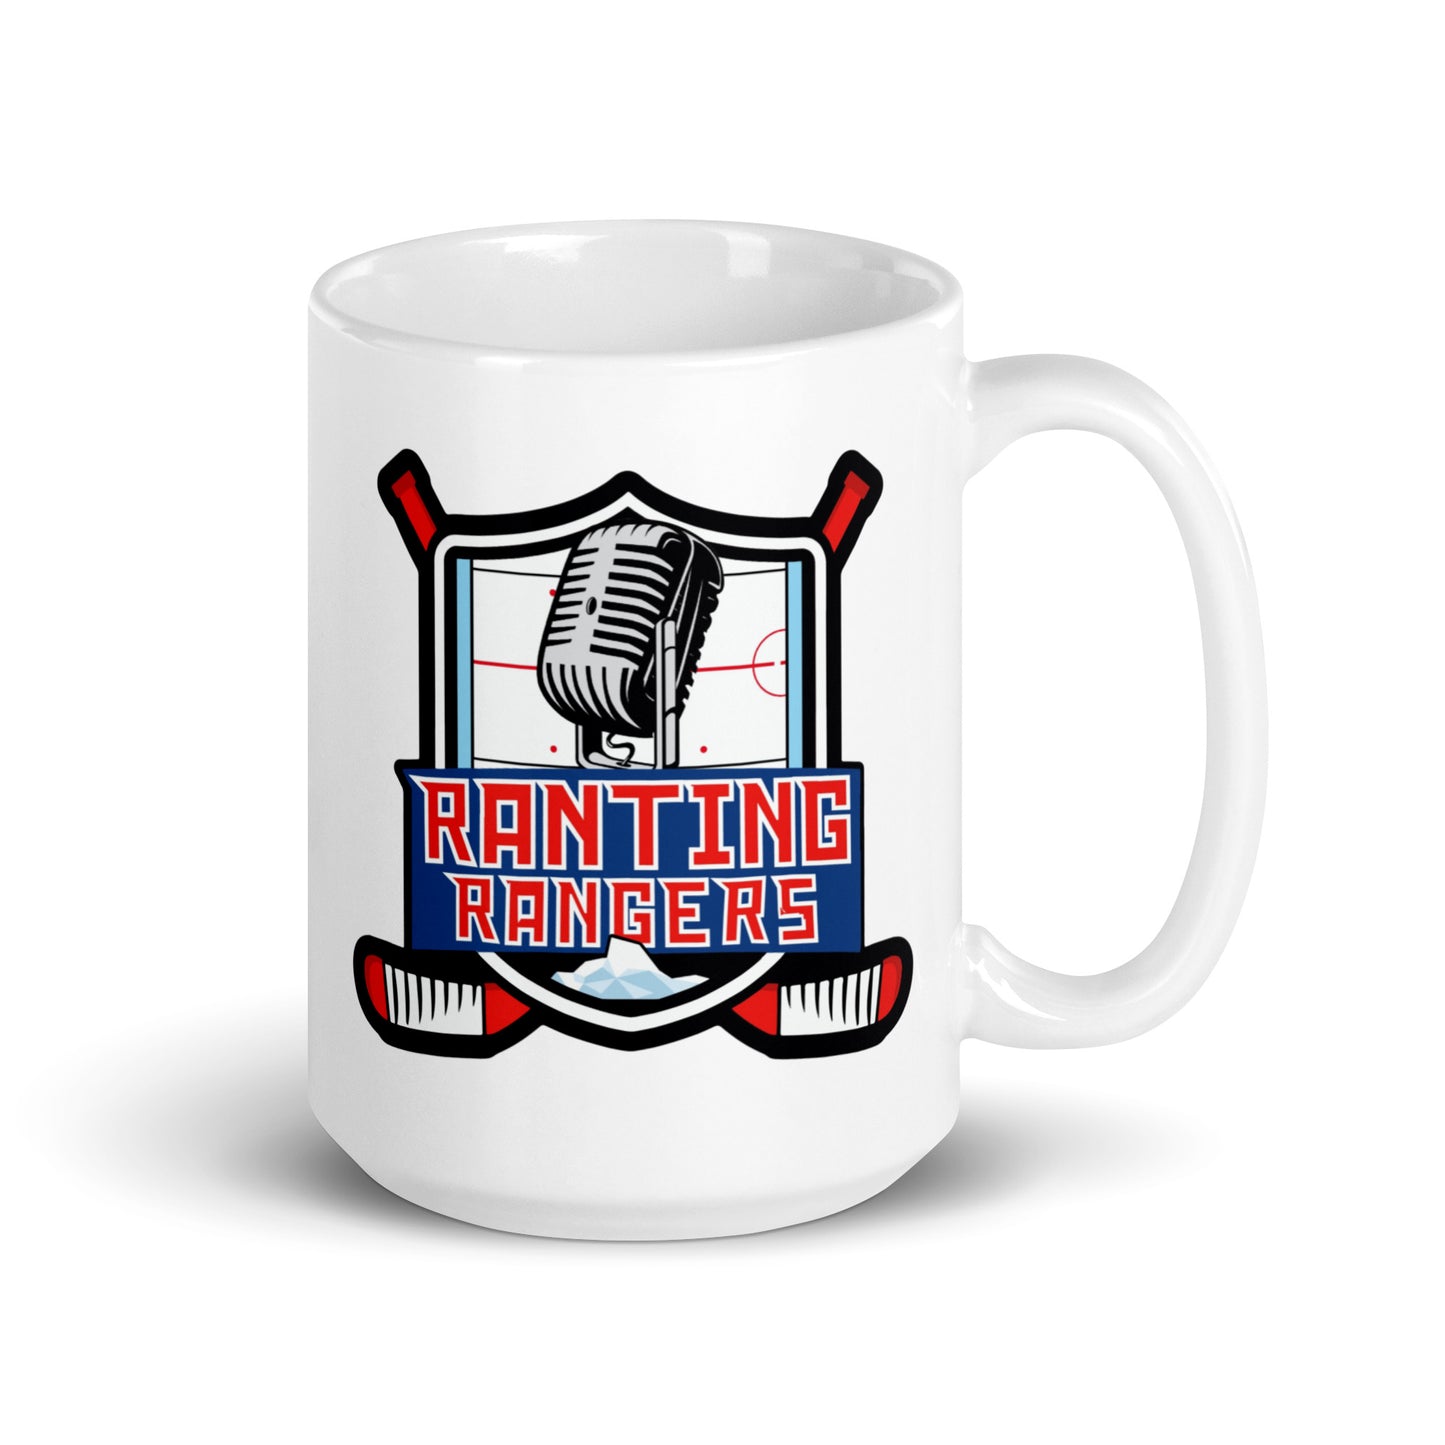 Ranting Rangers White glossy mug